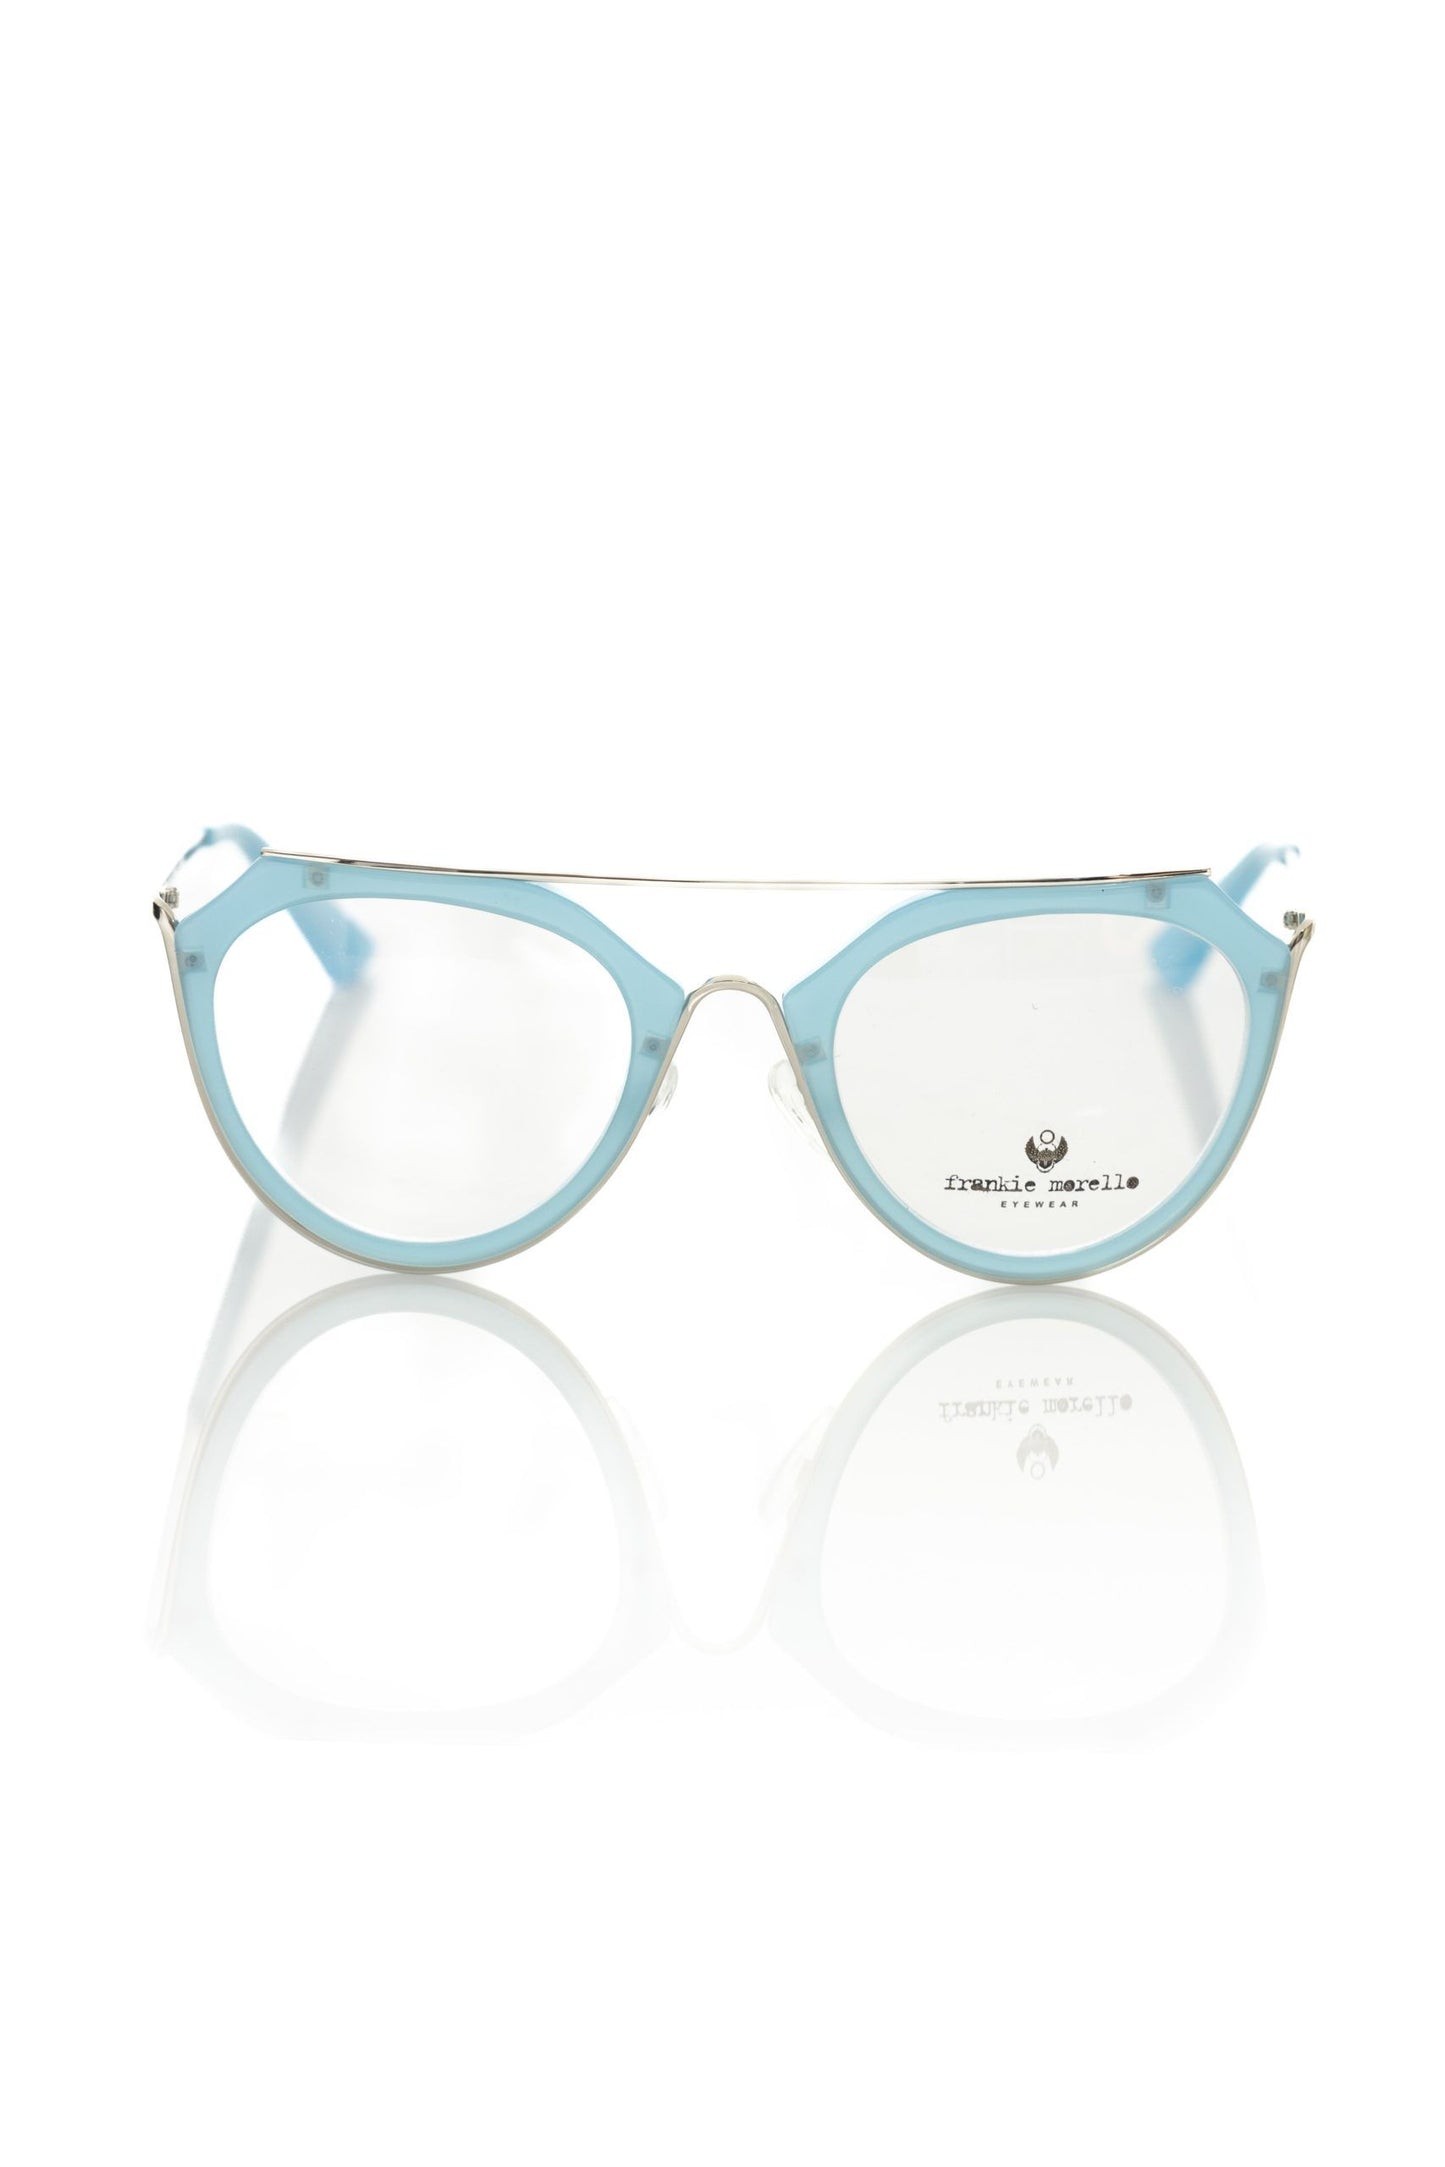 Aviator-Styled Chic Eyeglasses - Light Blue